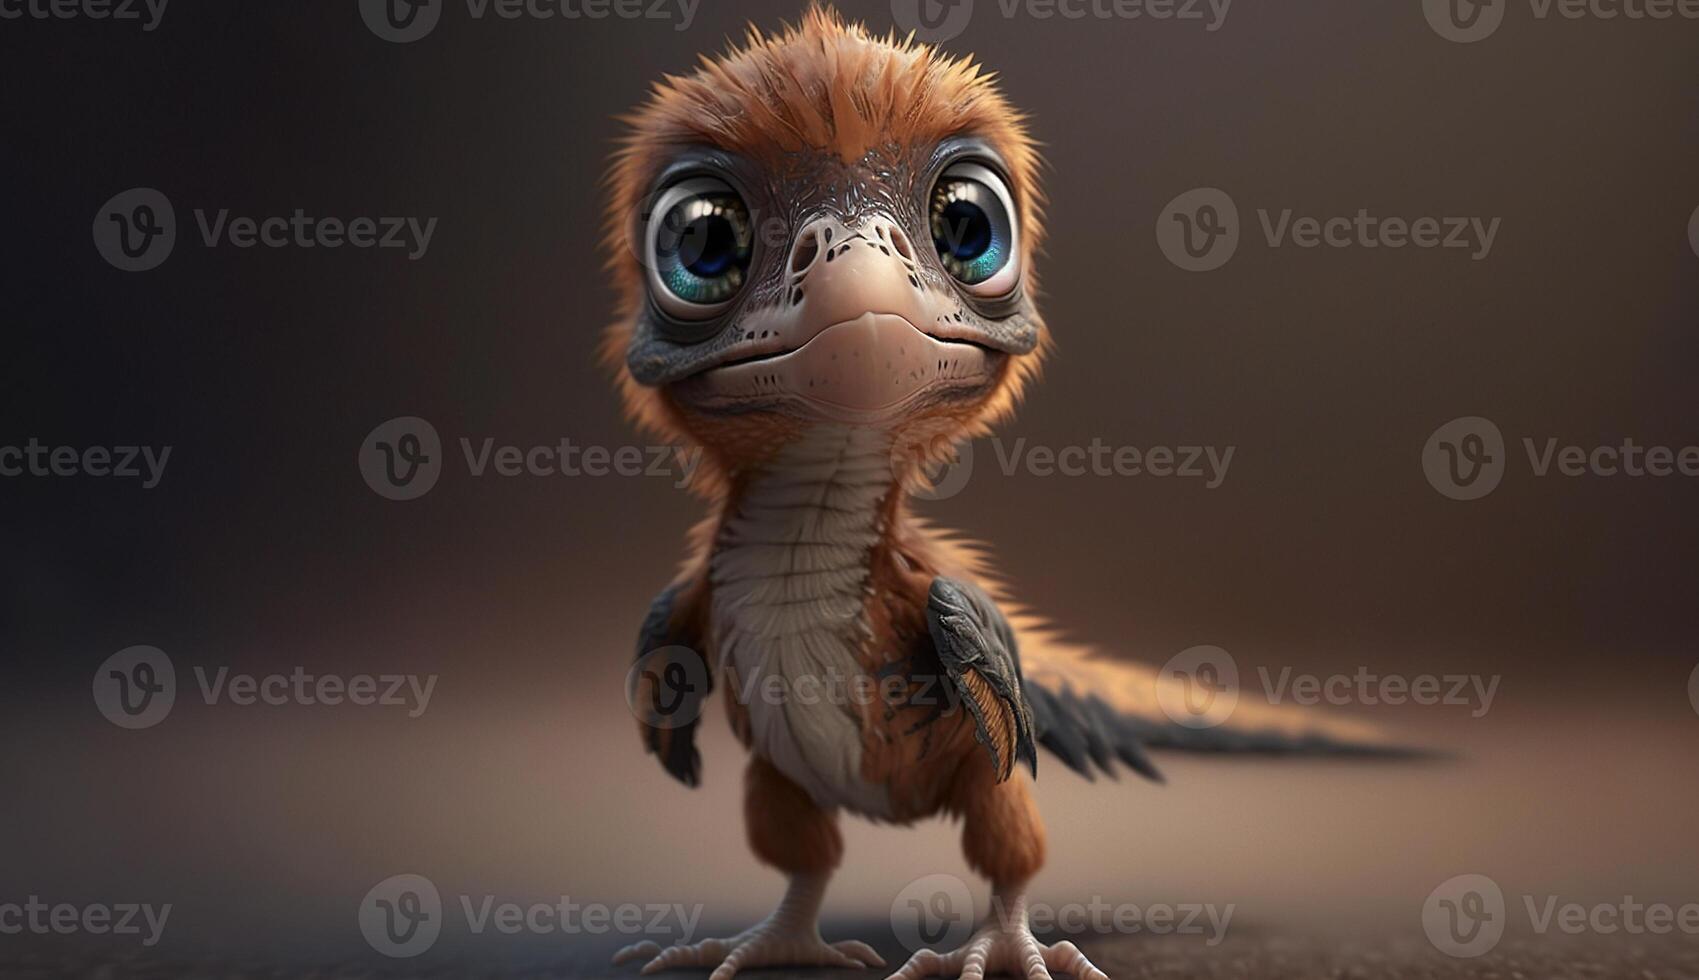 , baby of velociraptor, ancient carnivore dinosaur, extinct animal. Cute small animal. photo